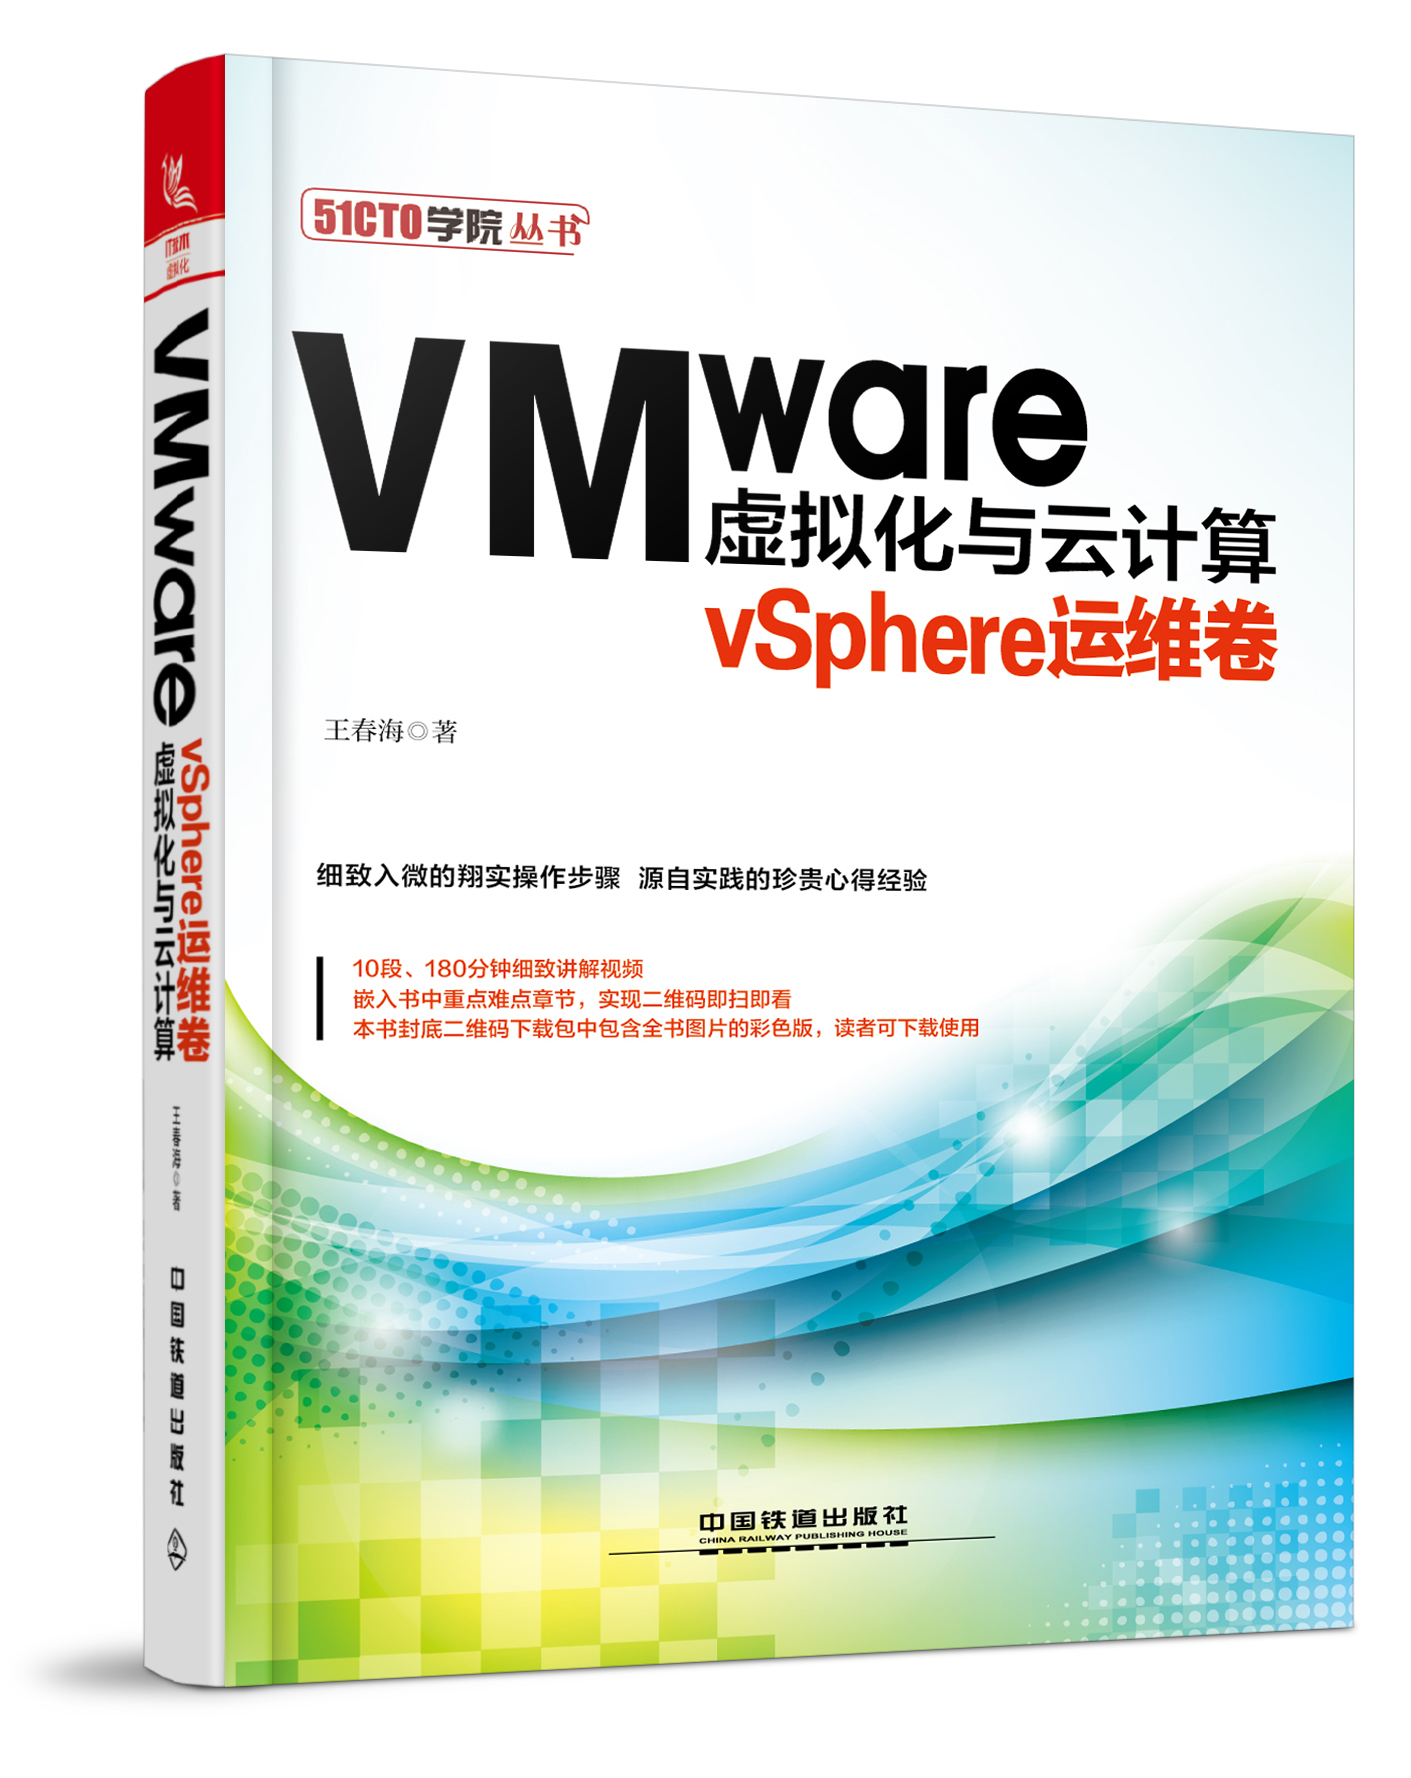 VMware虚拟化与云计算：vSphere运维卷-封面－20170906.jpg